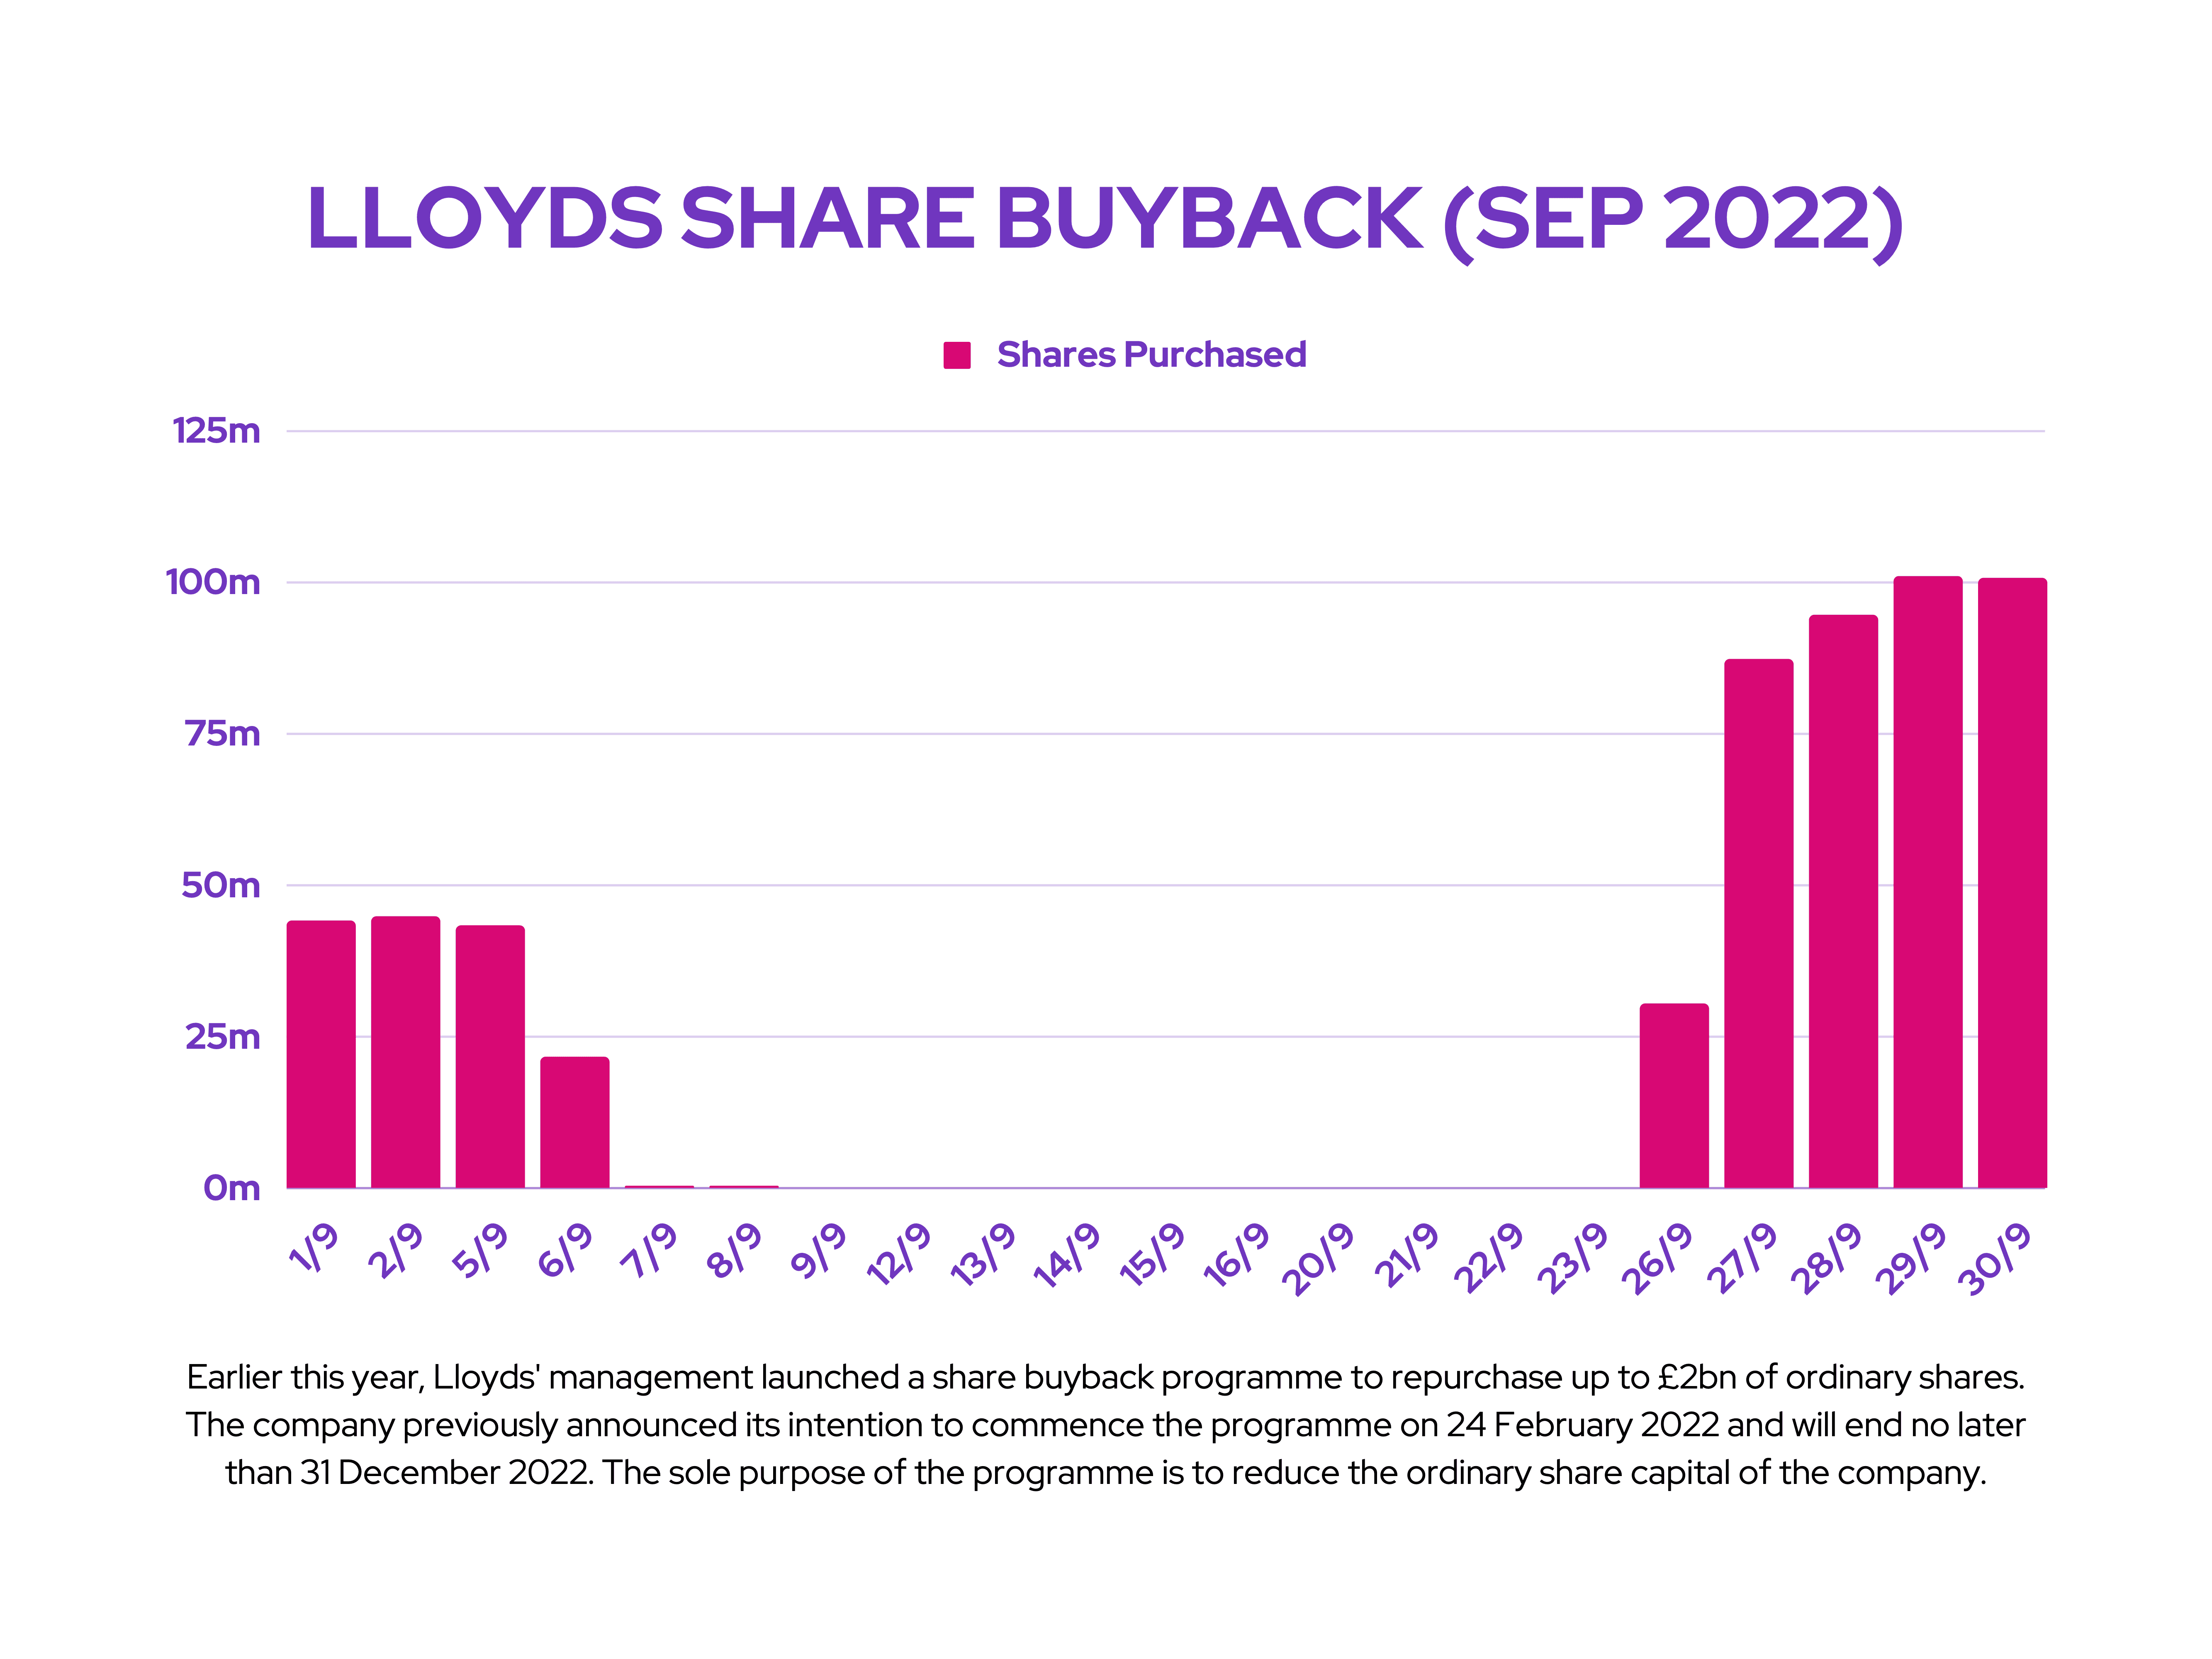 Lloyds: Share Buyback (SEP 2022)